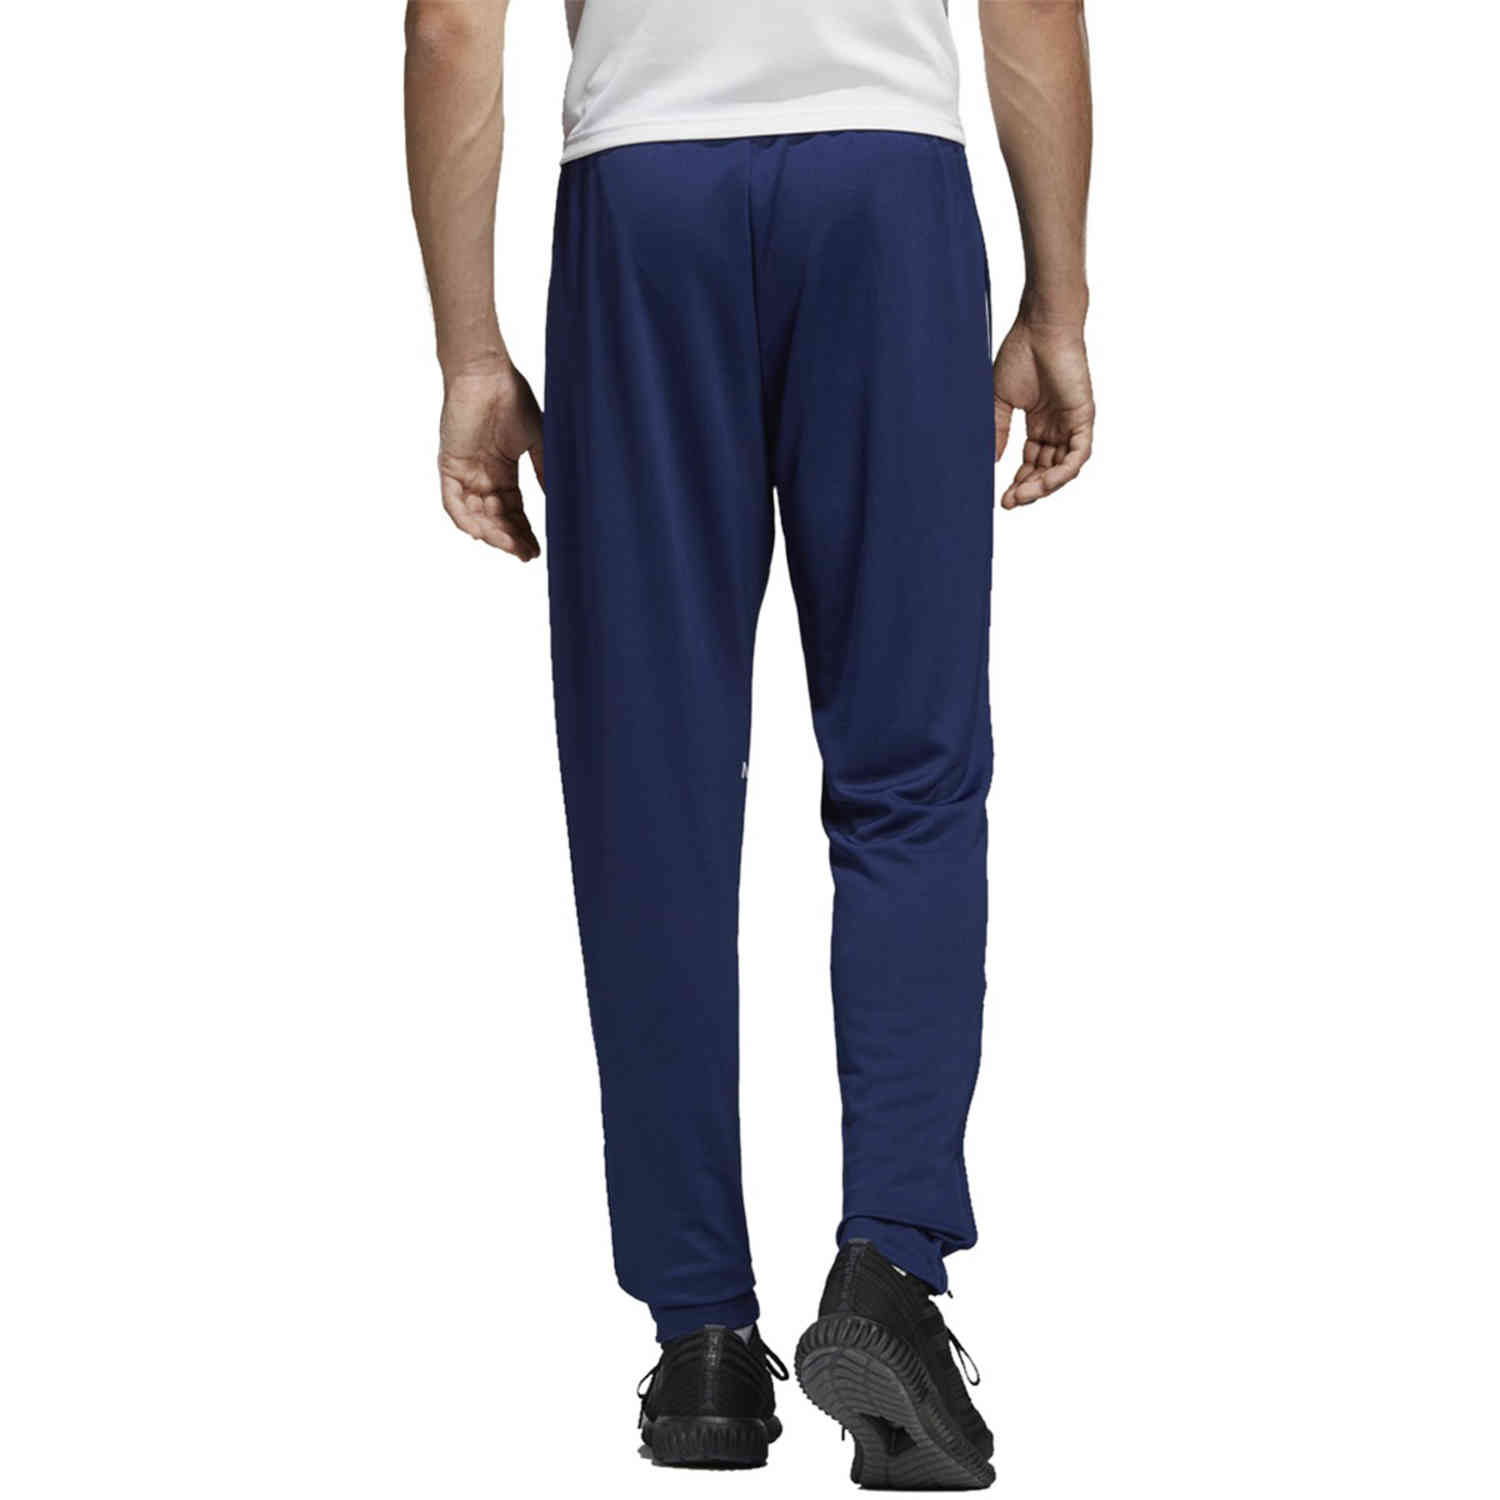 adidas Core 18 Training Pants - Dark Blue/White - SoccerPro